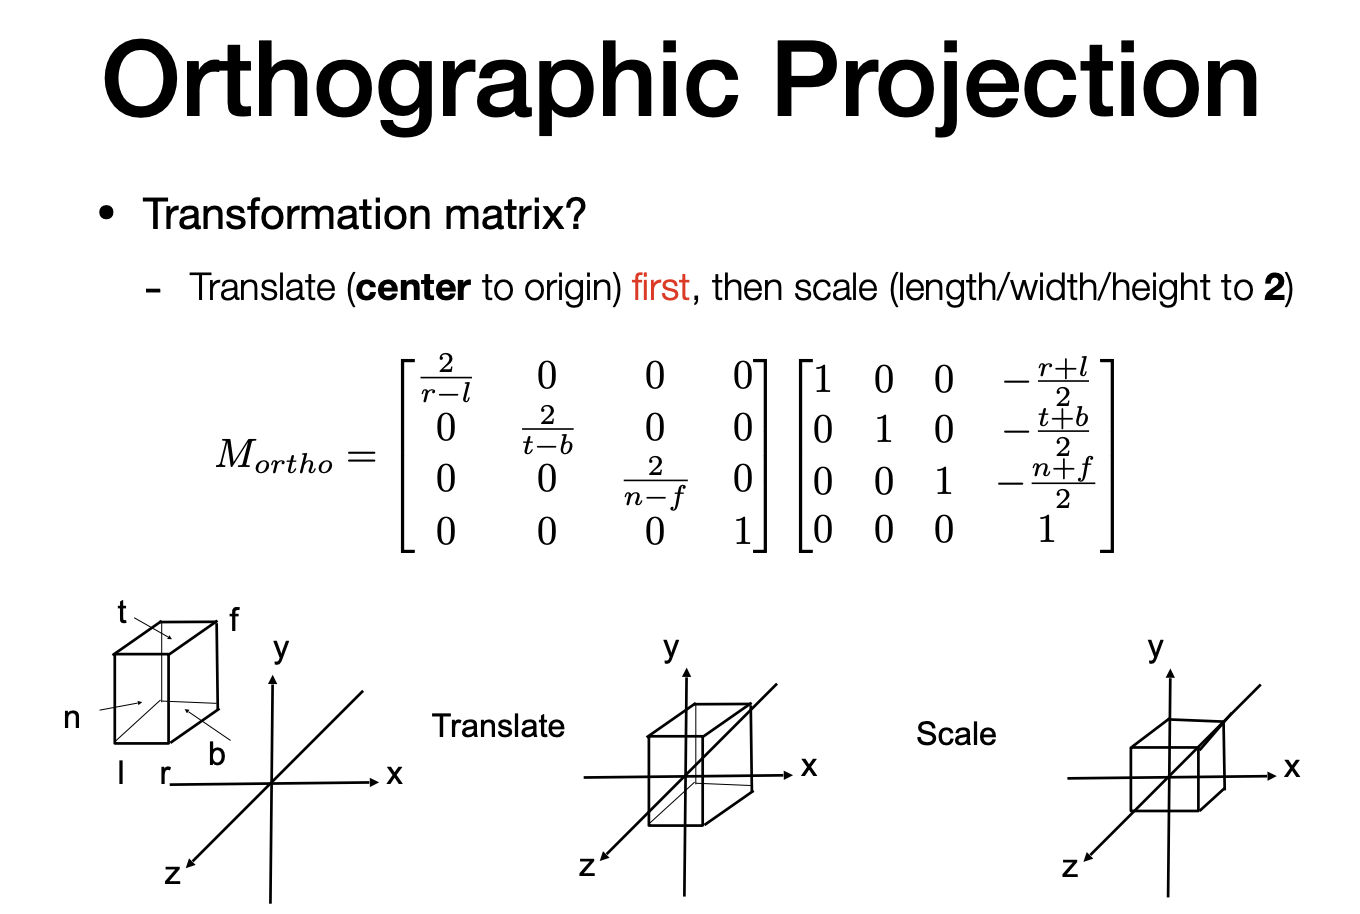 Orthographic projection - Transformation matrix